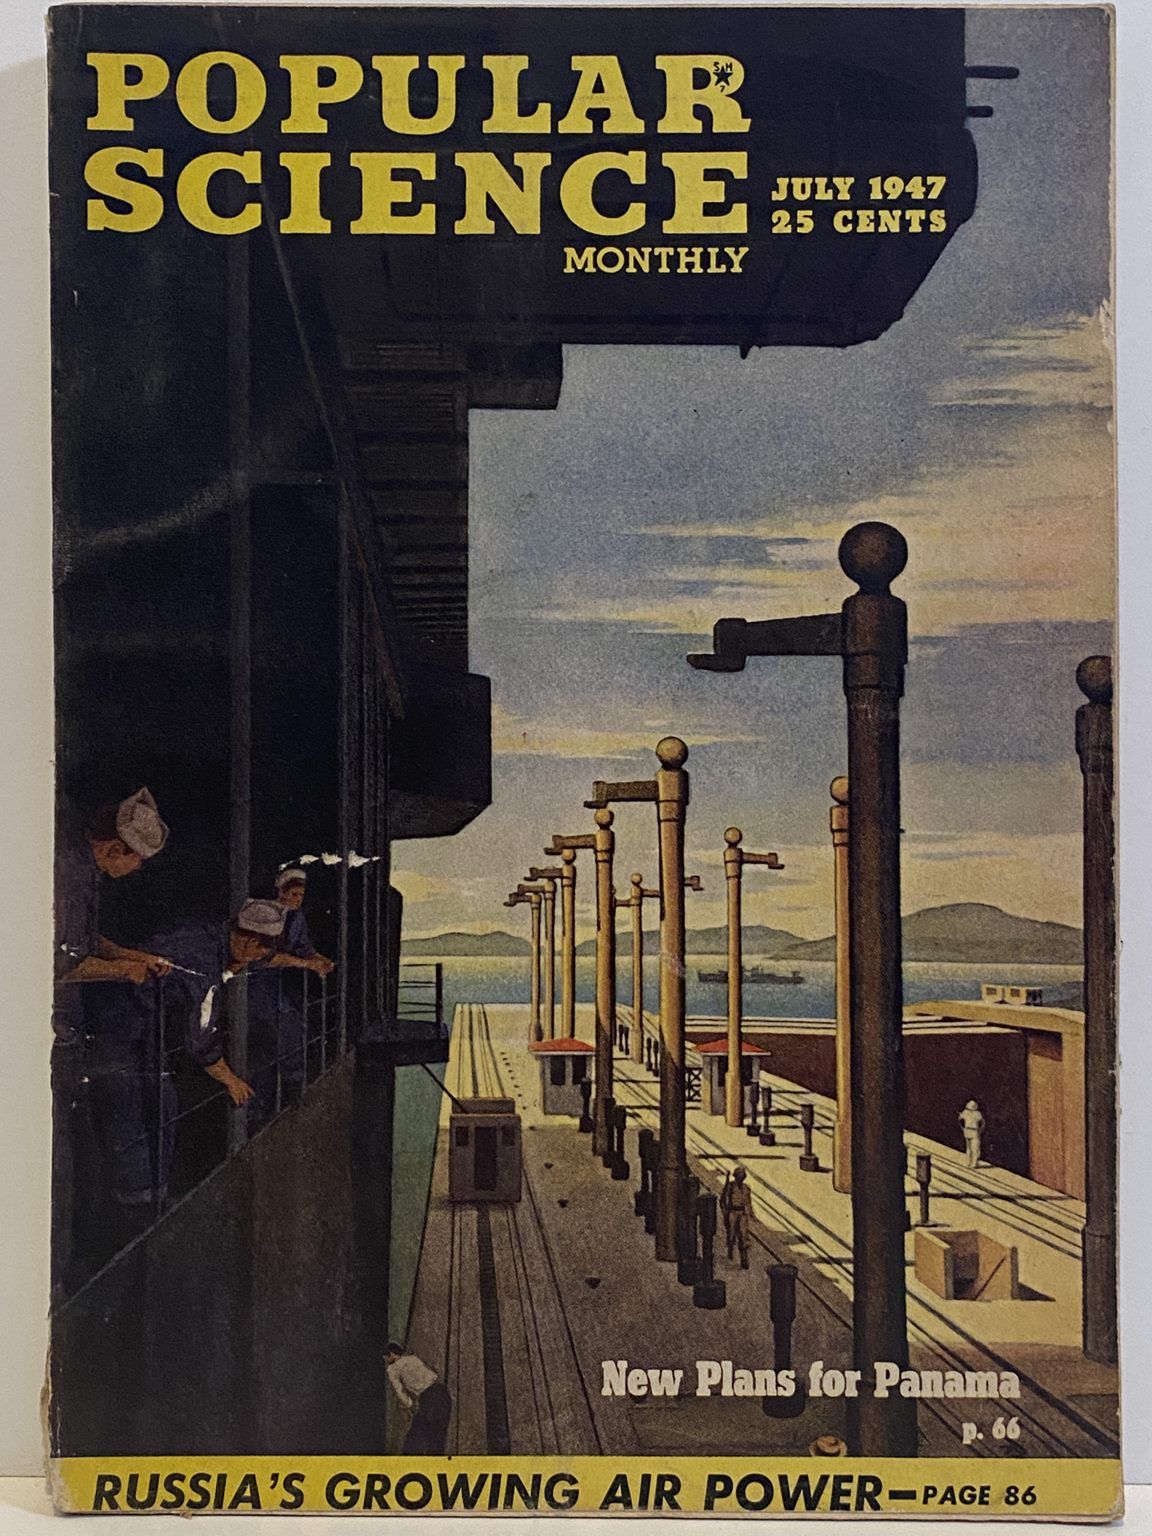 VINTAGE MAGAZINE: Popular Science, Vol. 151, No. 1 - July 1947